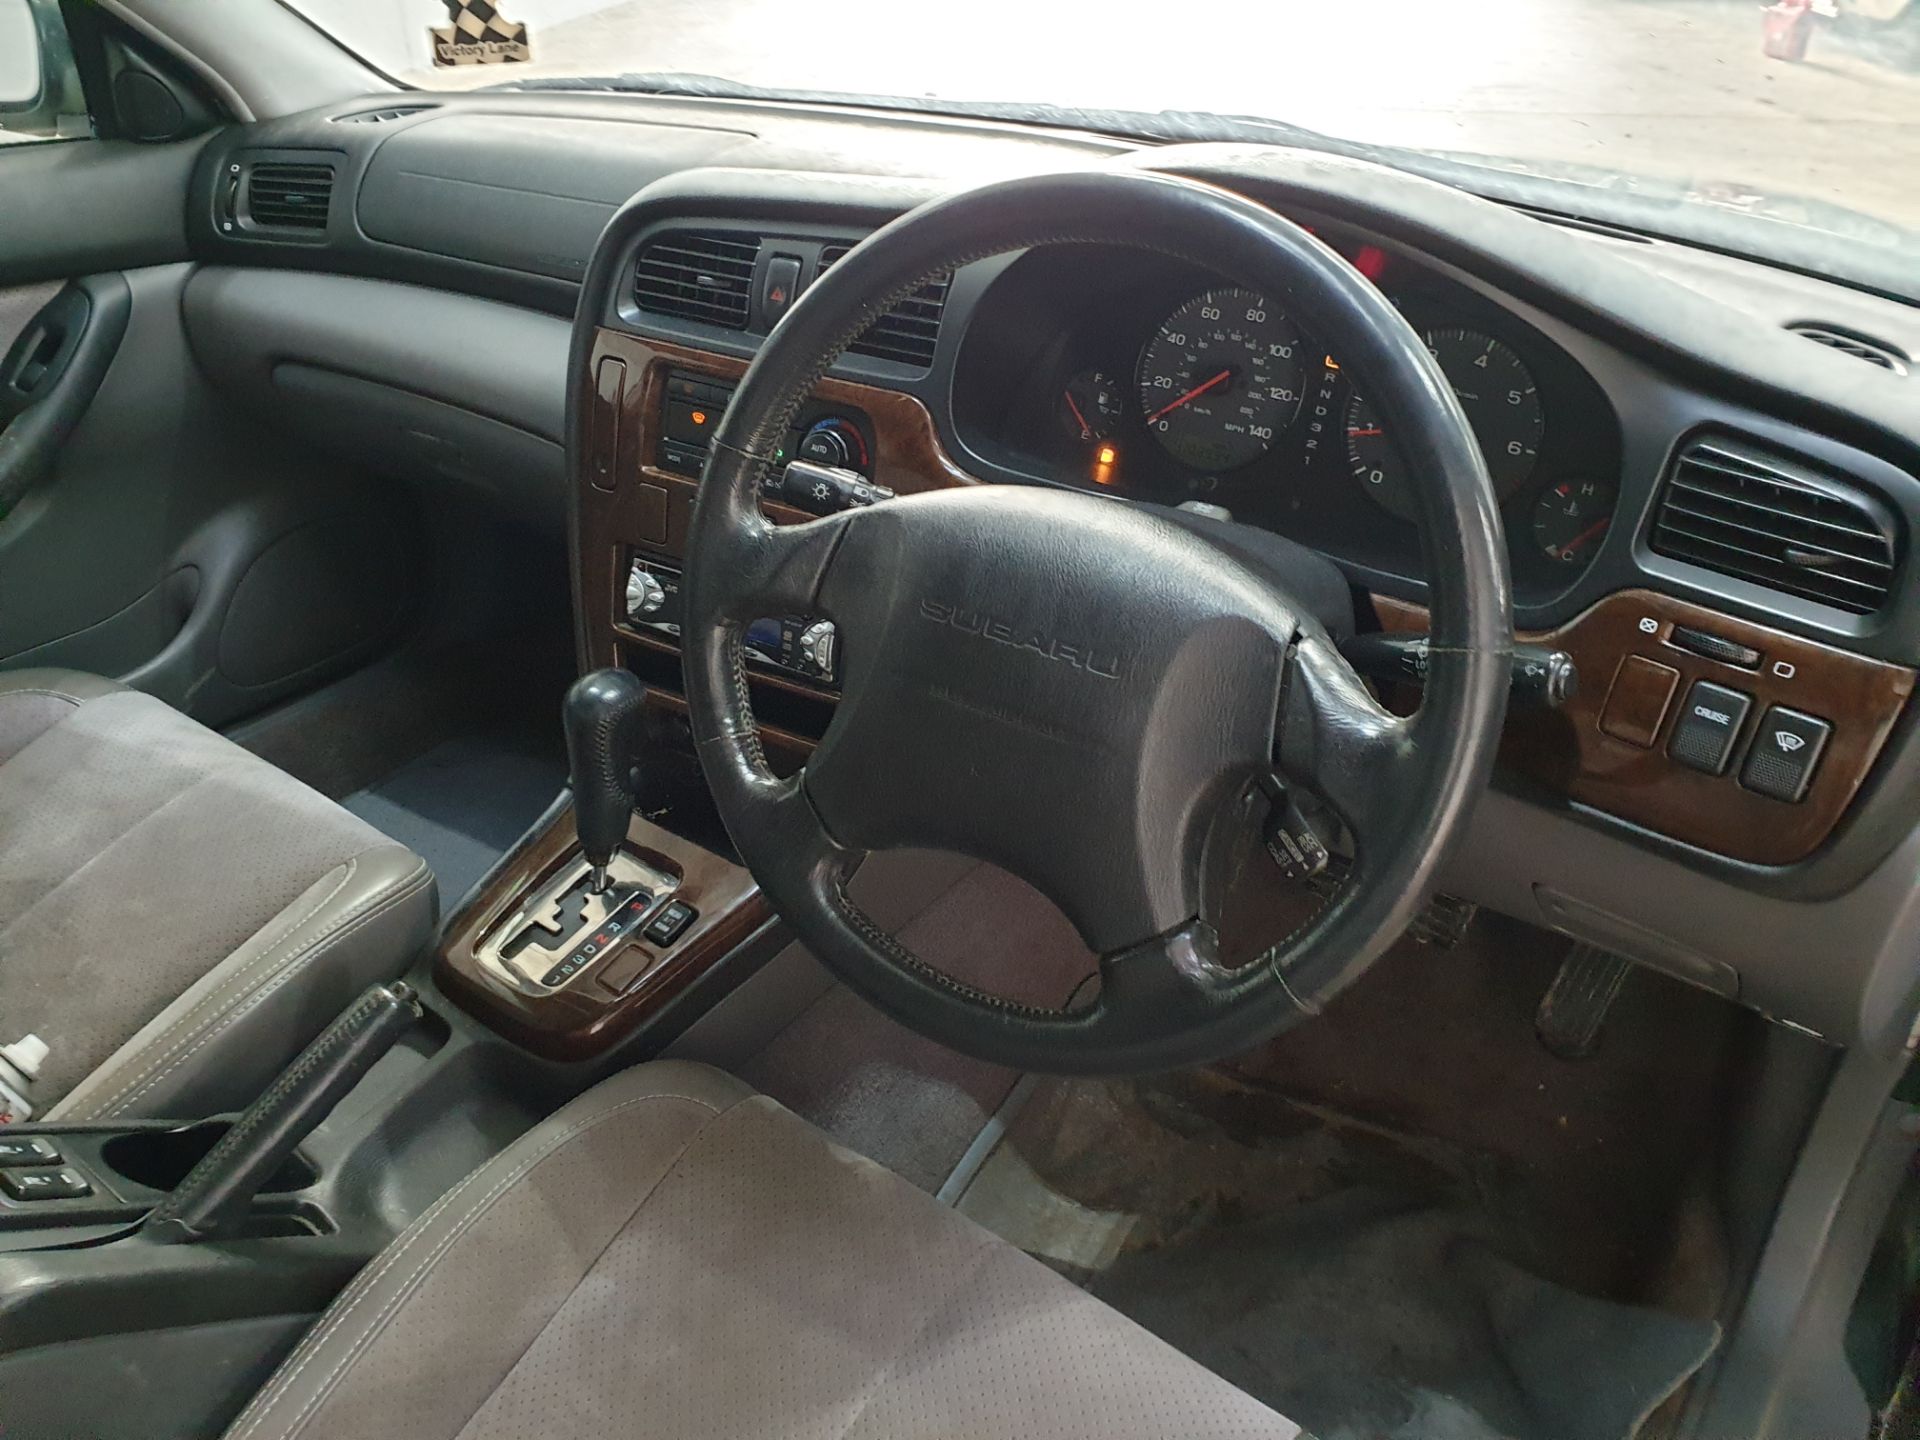 1998 Subaru Legacy estate - Image 11 of 14